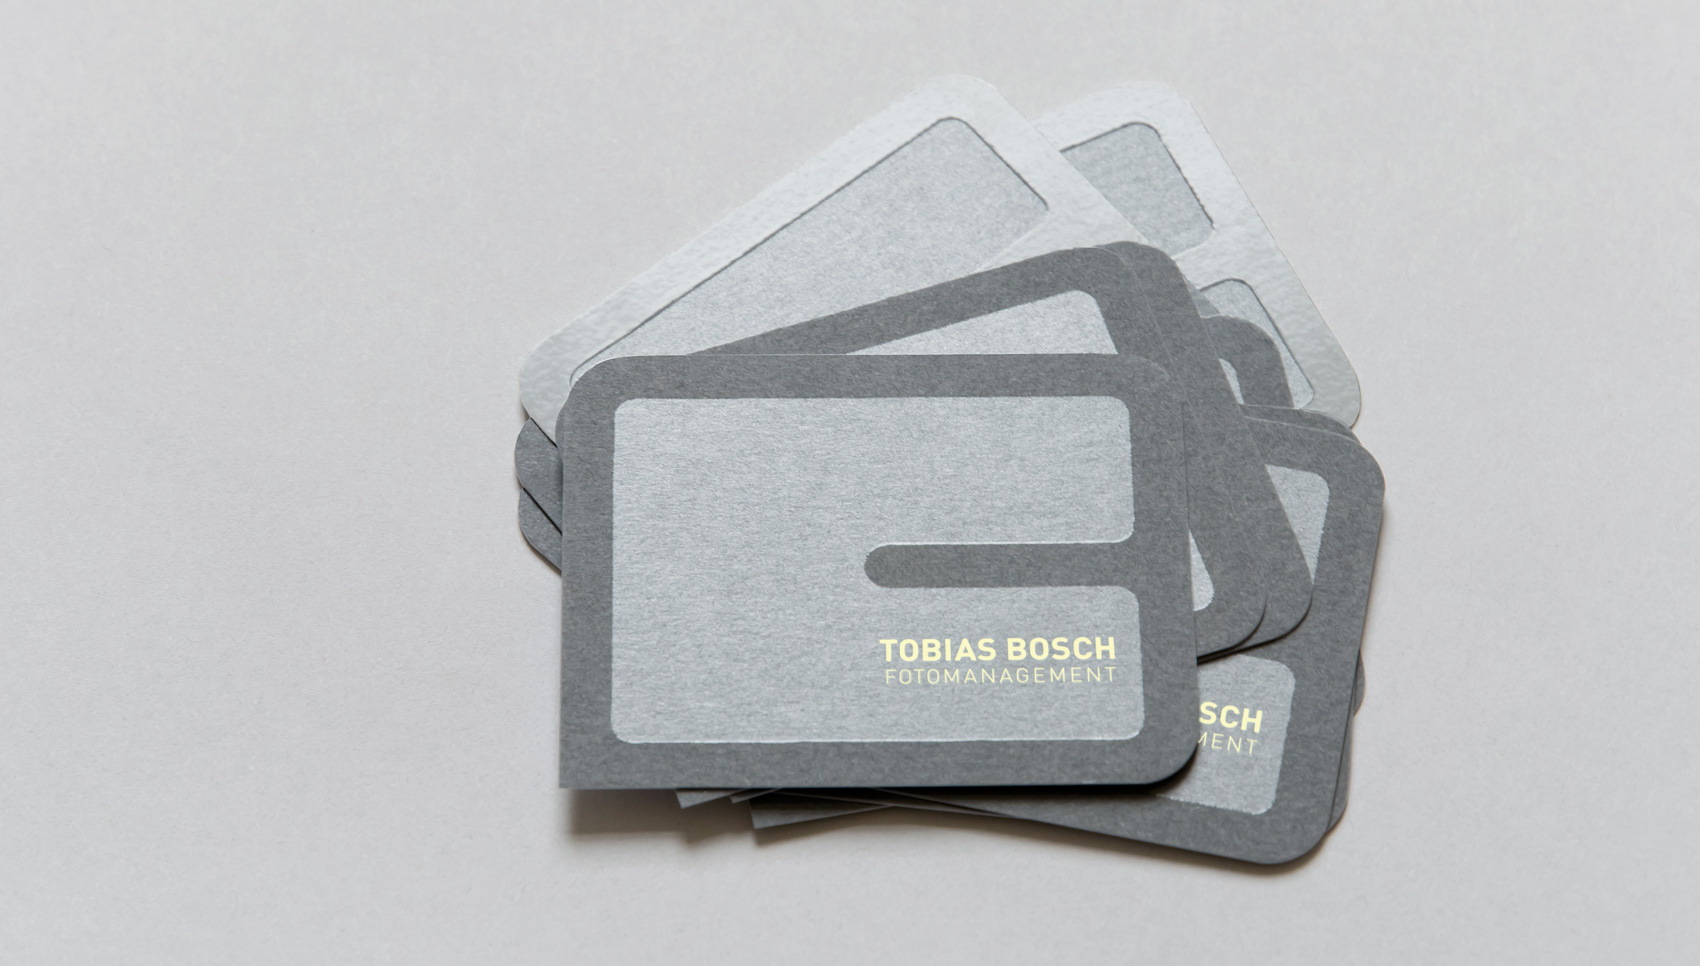 Tobias Bosch. Corporate Design.